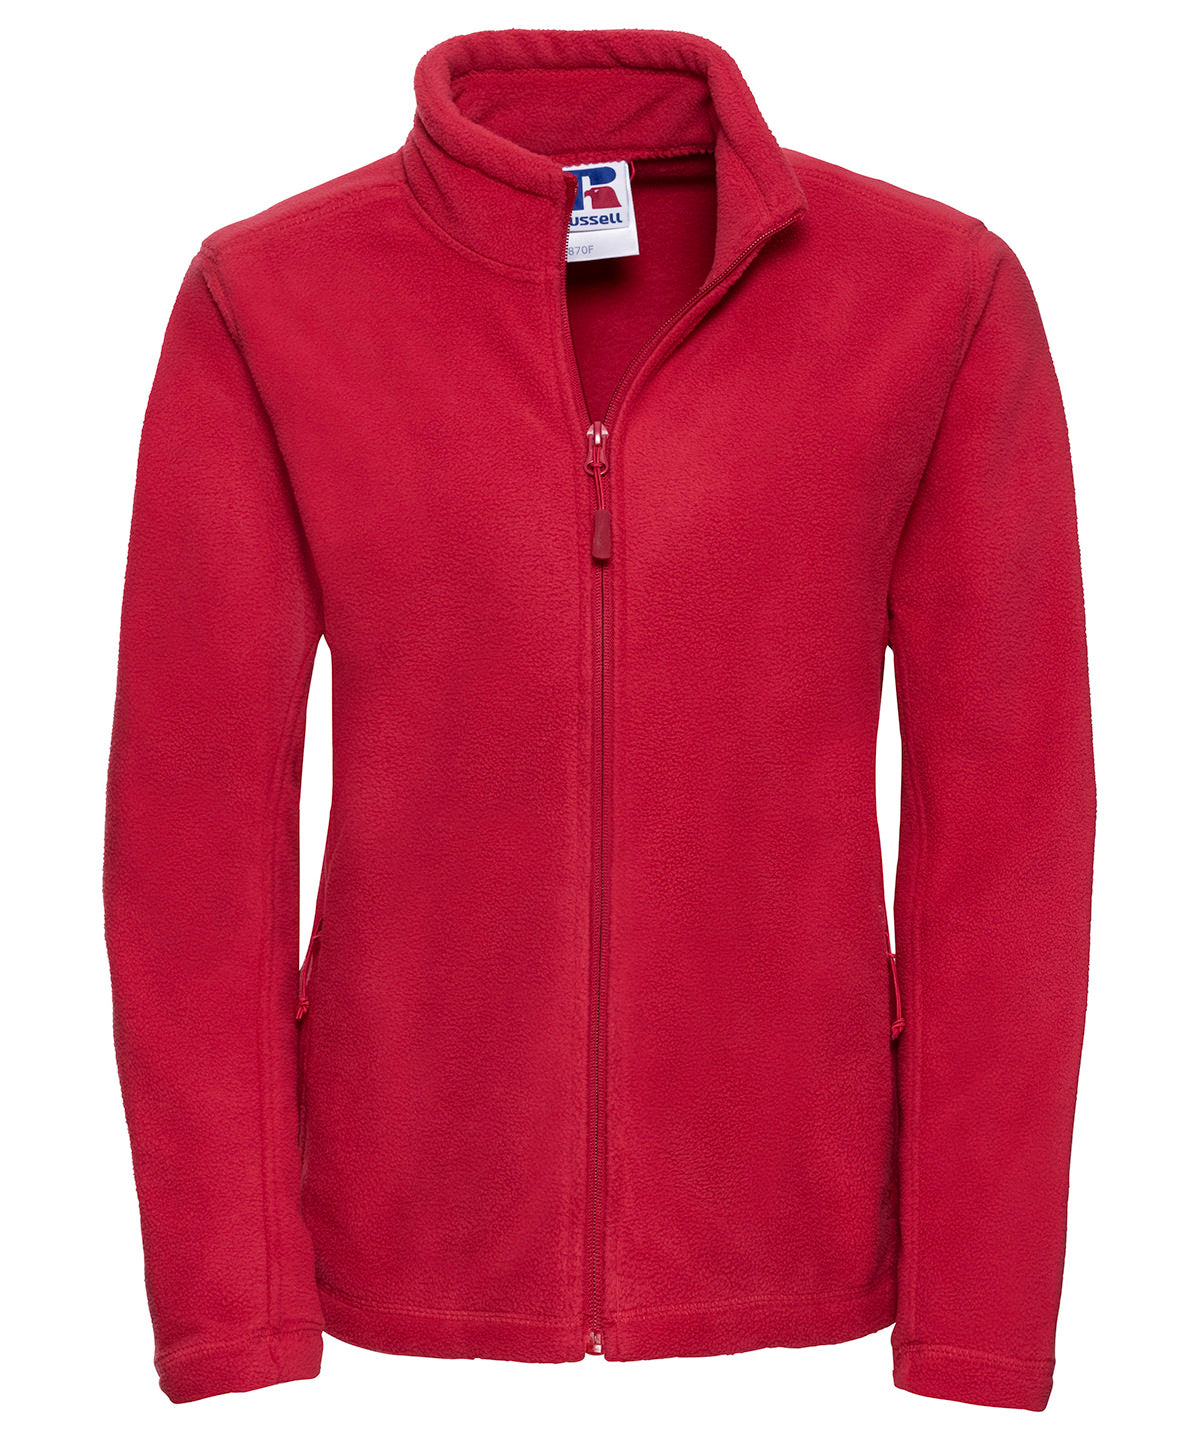 Personalised Jackets - Black Russell Europe Women's full-zip outdoor fleece